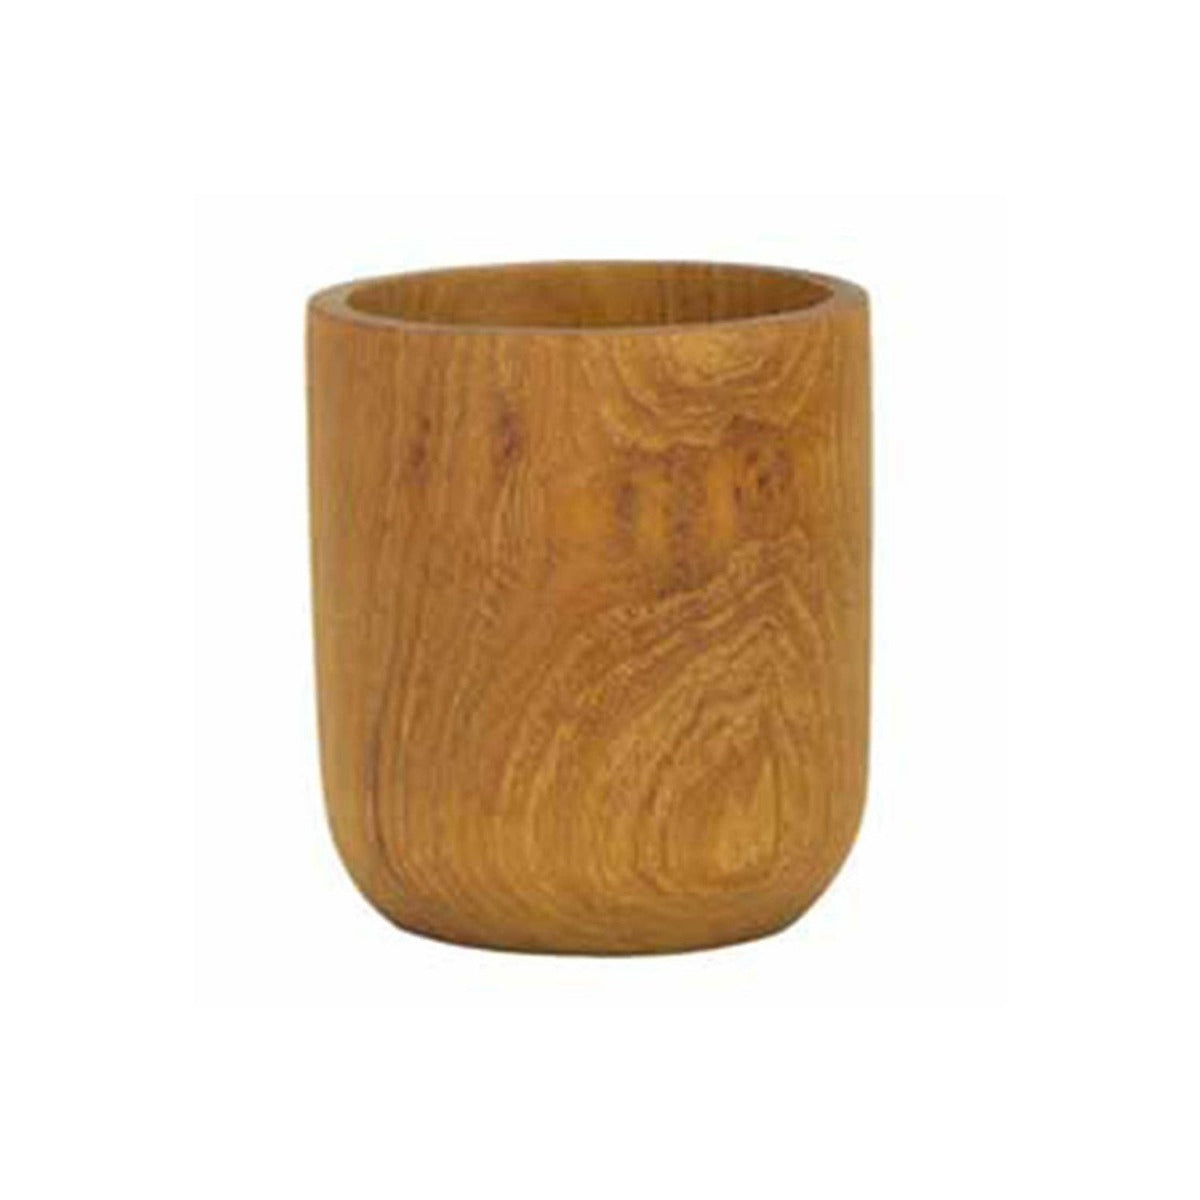 Hand-Carved Hardwood Teak Root Cup, 8 Oz